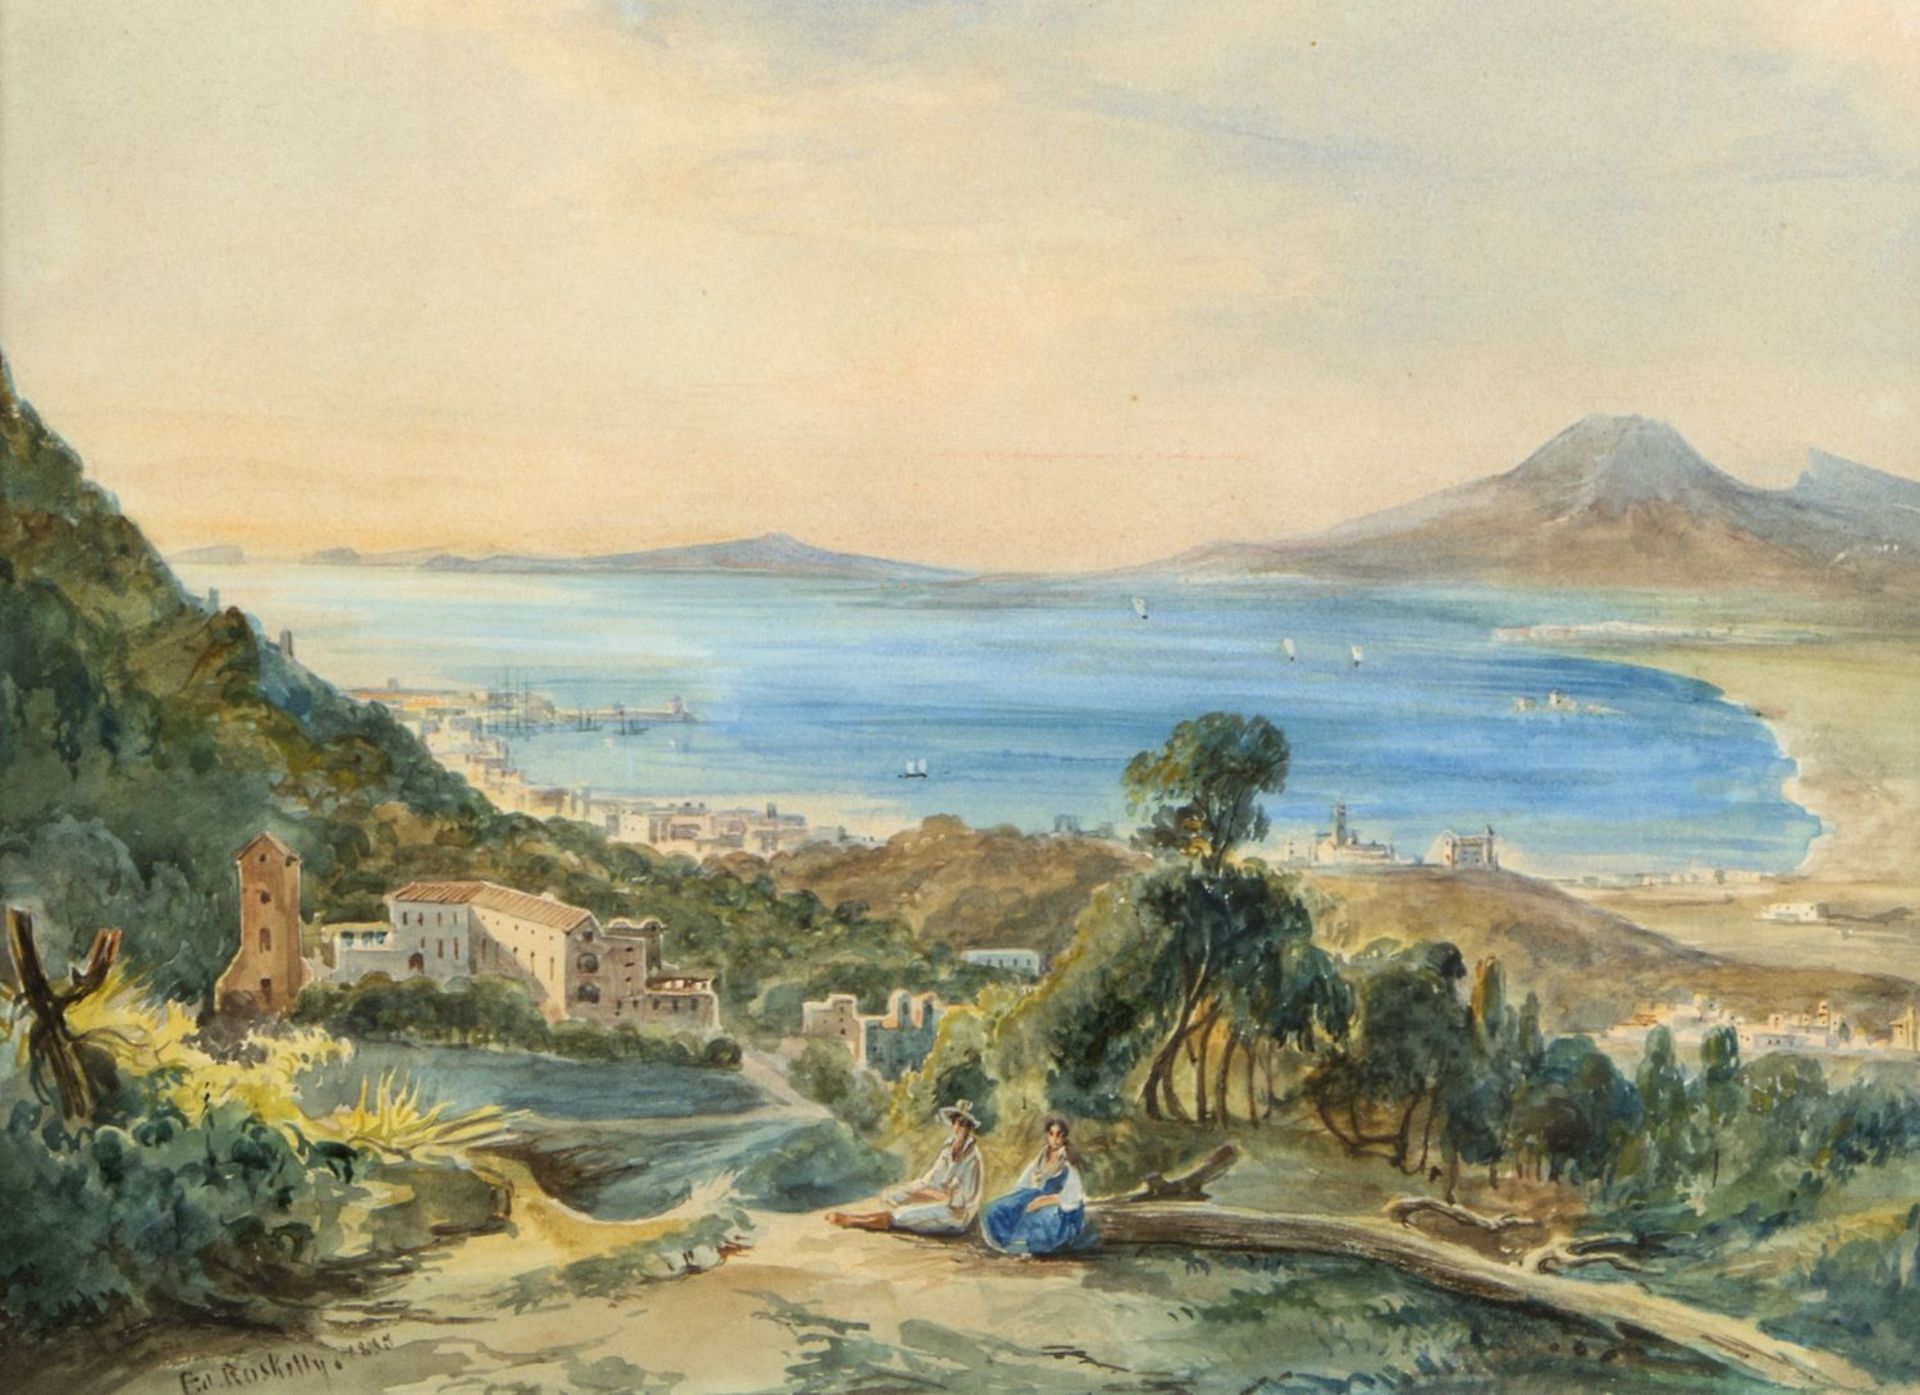 Roskilly, Eduardo Bucht von Neapel. Aquarell. Sign. und dat. 1835. 25 x 32 cm.